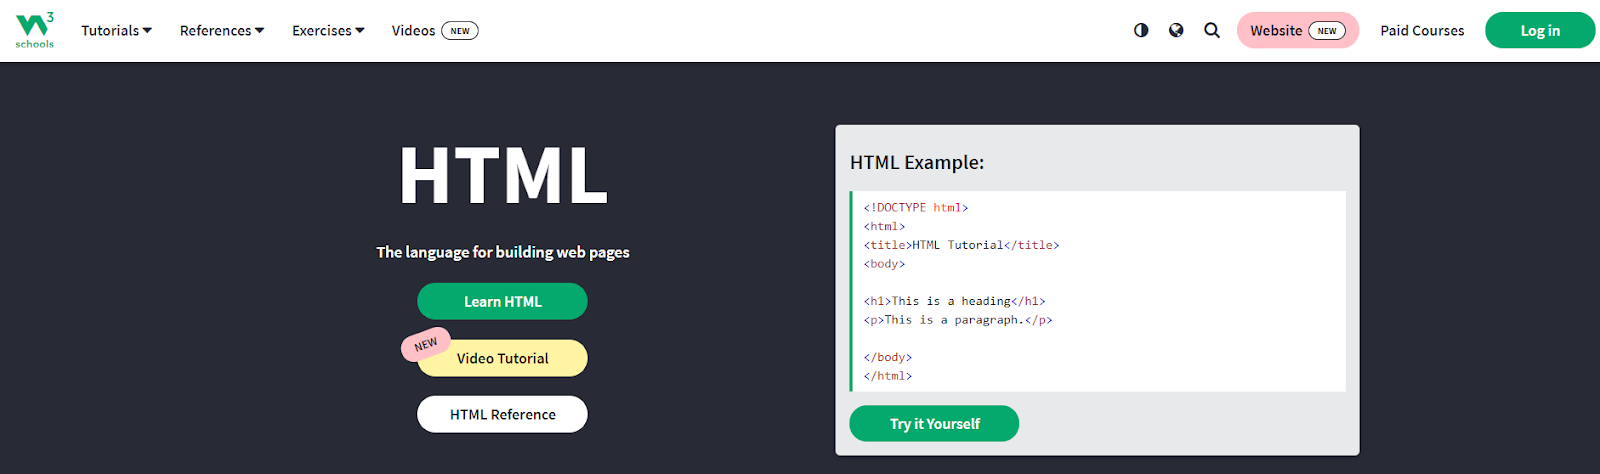 W3Schools HTML tutorial